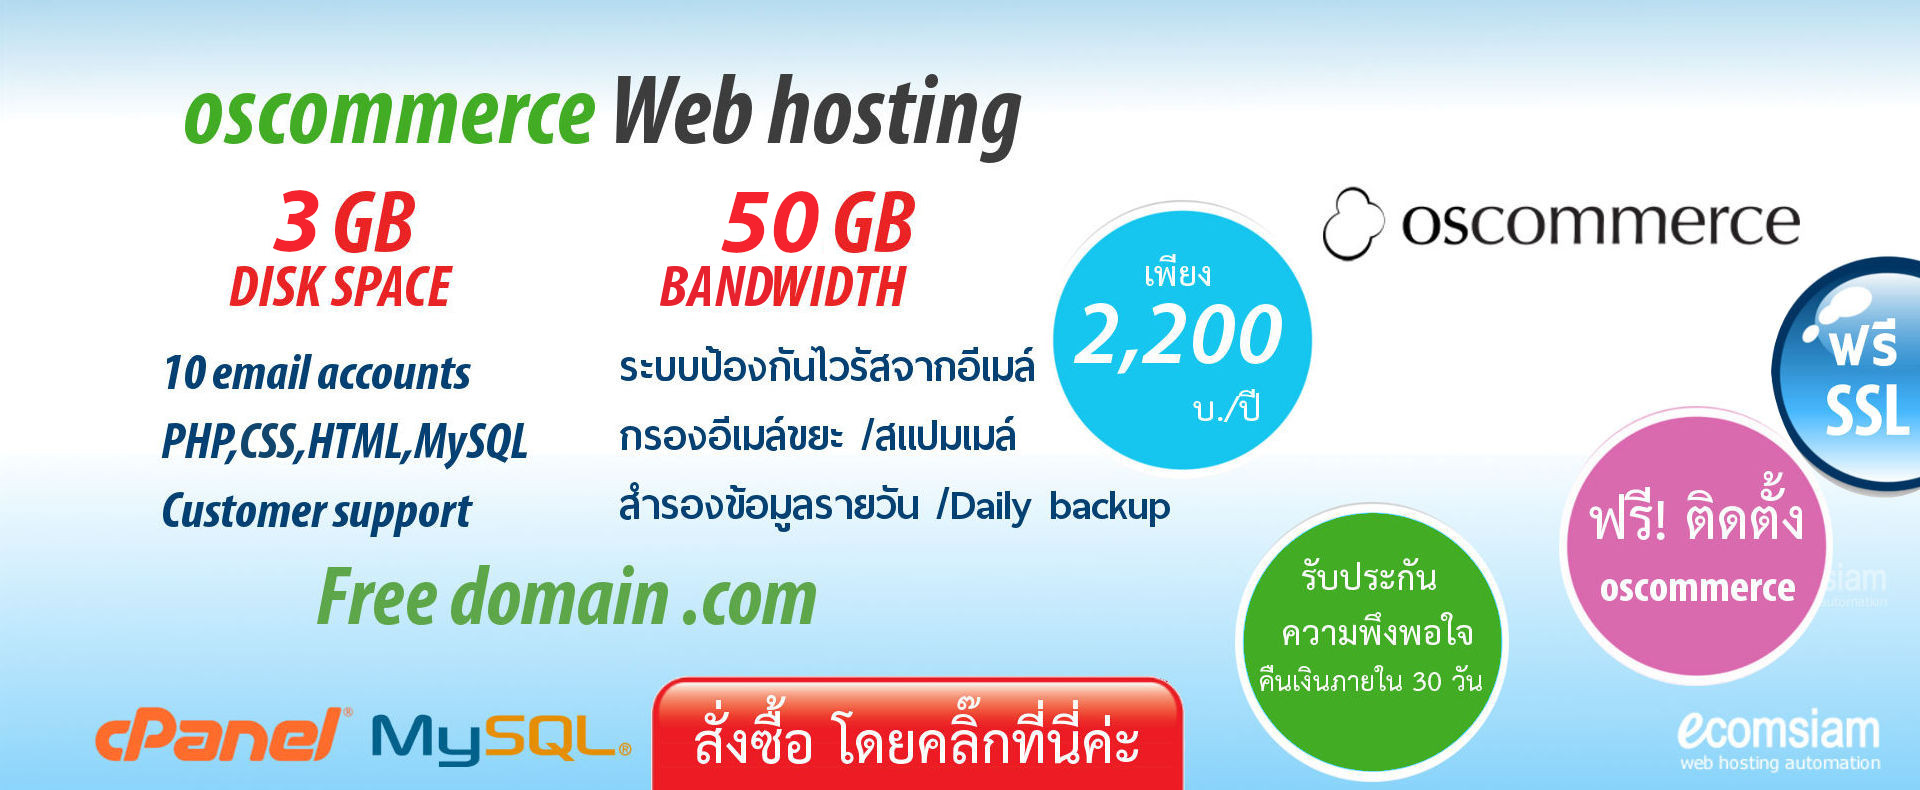 web hosting thai แนะนำ Oscommerce web hosting thailand เพียง 2,200 บ./ปี เว็บโฮสติ้งไทย ฟรี โดเมน ฟรี SSL ฟรีติดตั้ง แนะนำเว็บโฮสติ้ง บริการลูกค้า  Support ดูแลดี โดย webhostthai.com - oscommerce web hosting thailand free domain